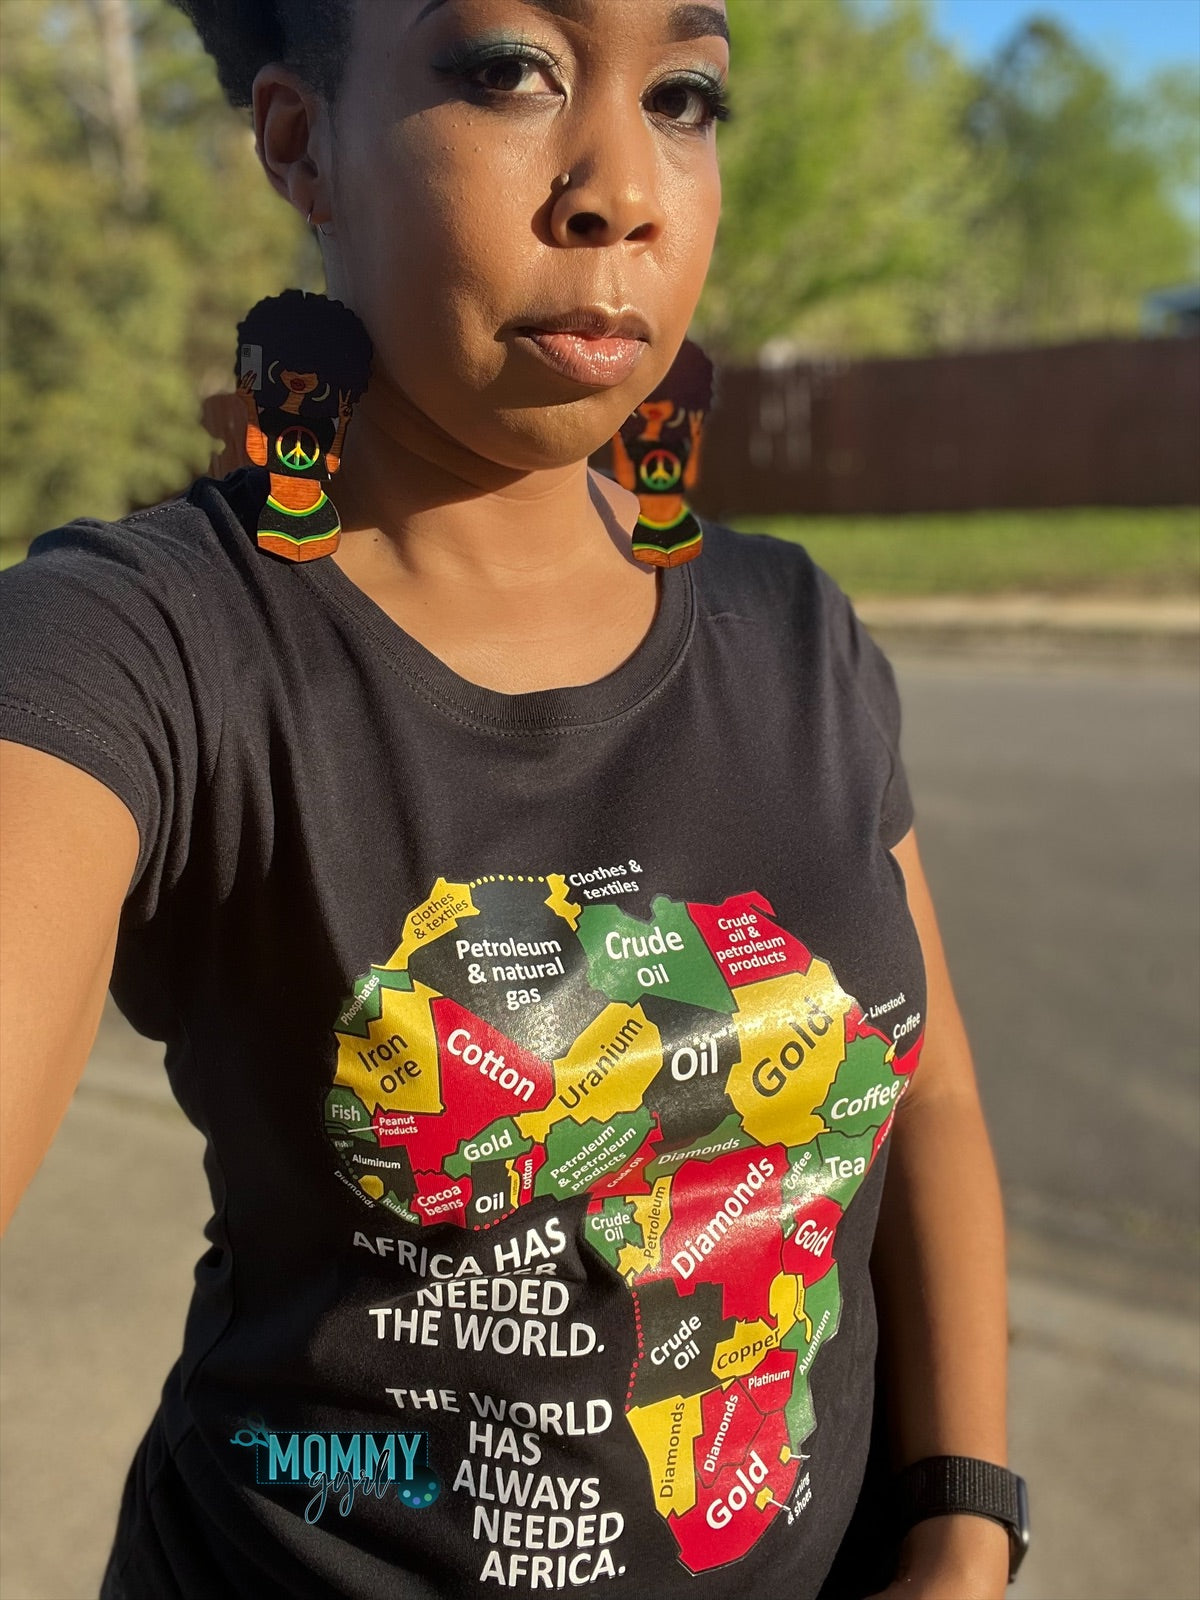 Africa Never Needed Shirt